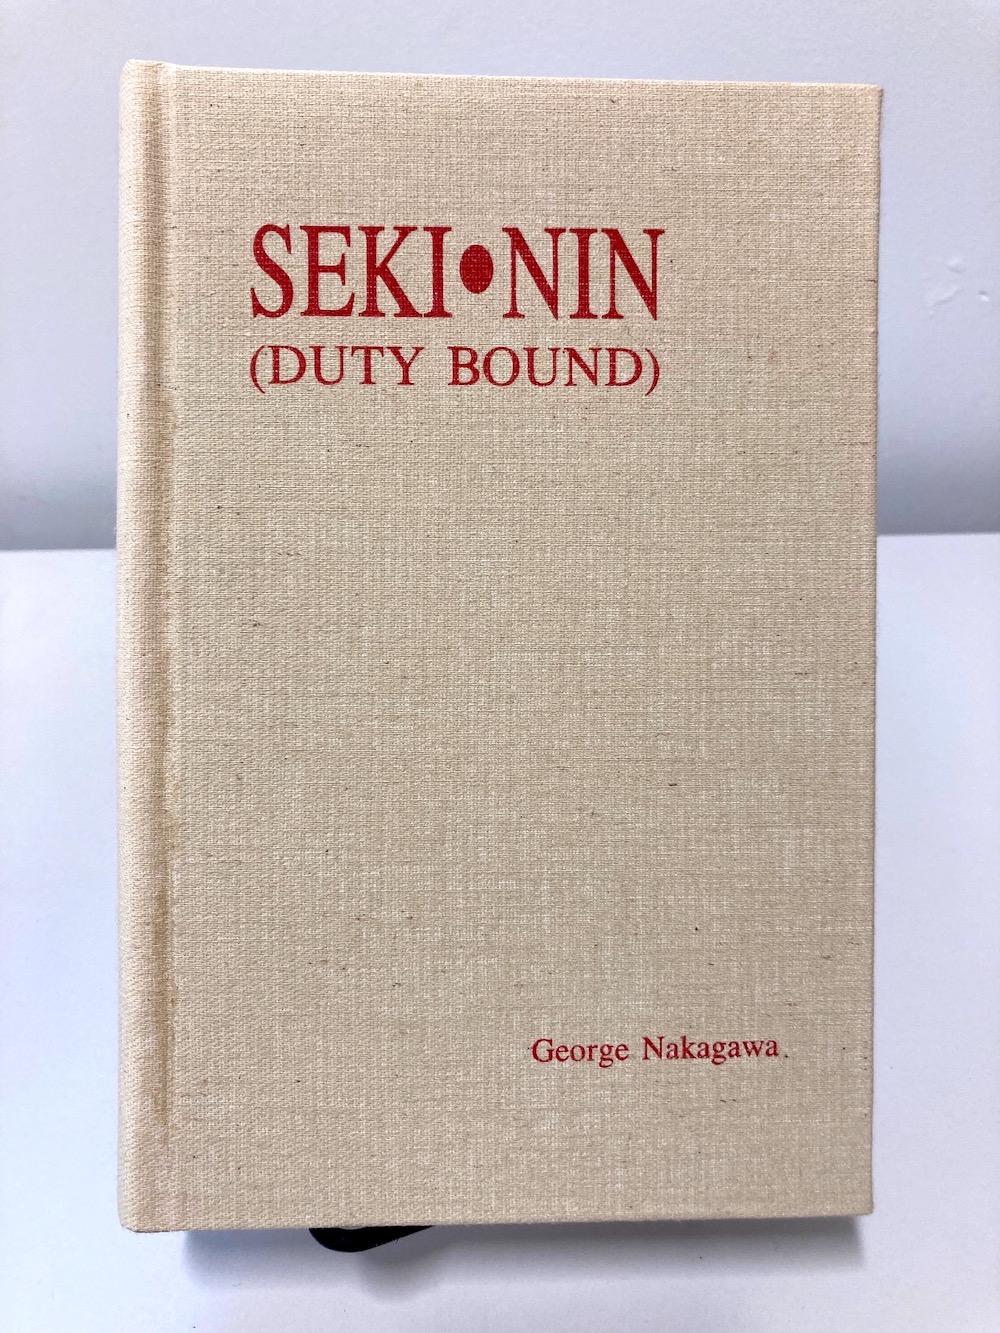 Seki-Nin book cover